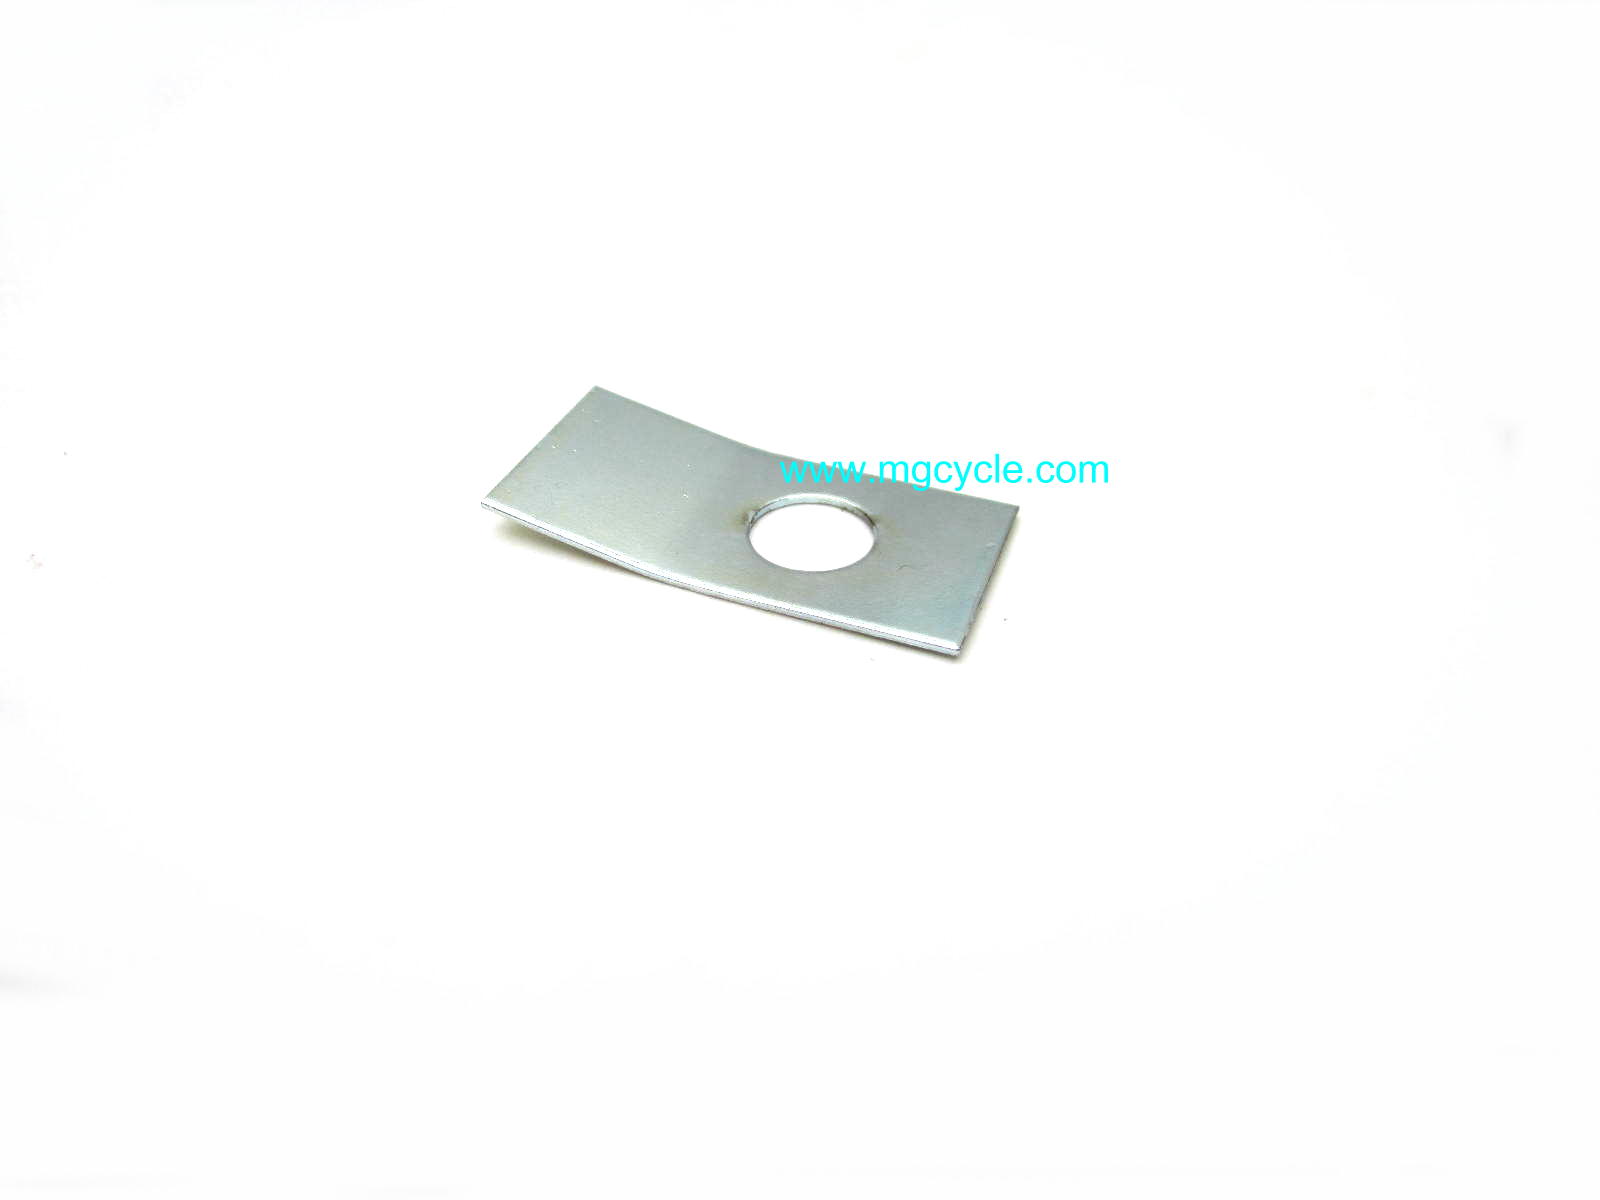 Rear drive flange locking plate, fold over lock tab